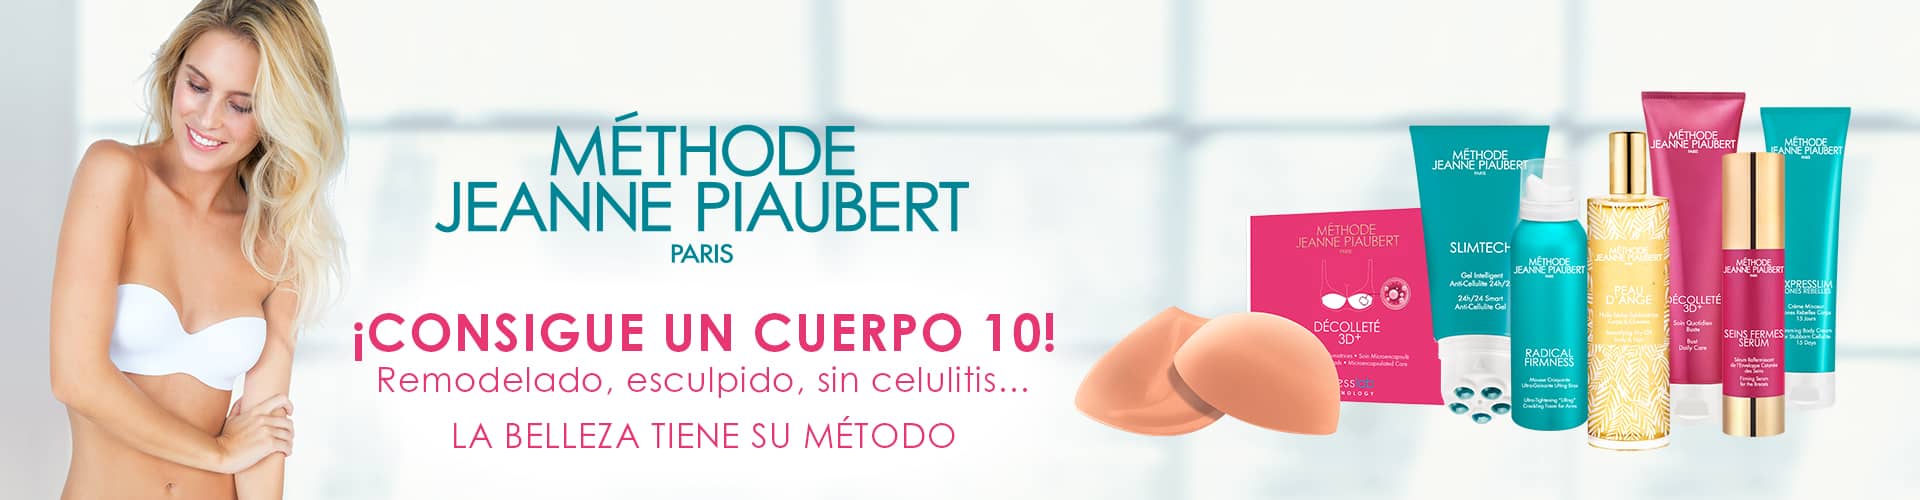 Méthode Jeanne Piaubert | Consigue un Cuerpo 10 | Prieto.es